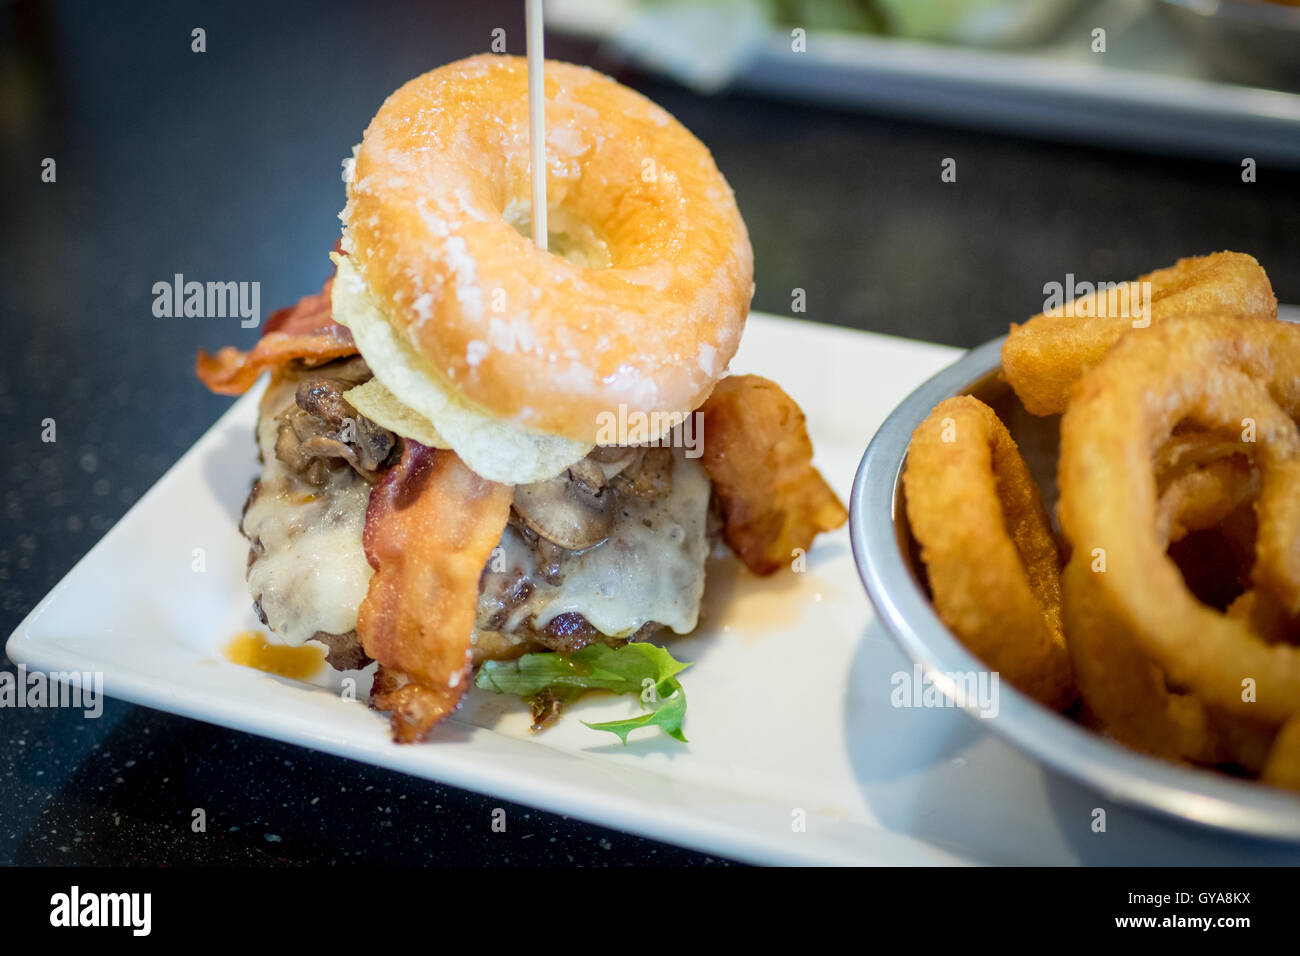 A bacon donut burger (Luther Burger) from Soda Jerks restaurant in Edmonton, Alberta, Canada. Stock Photo